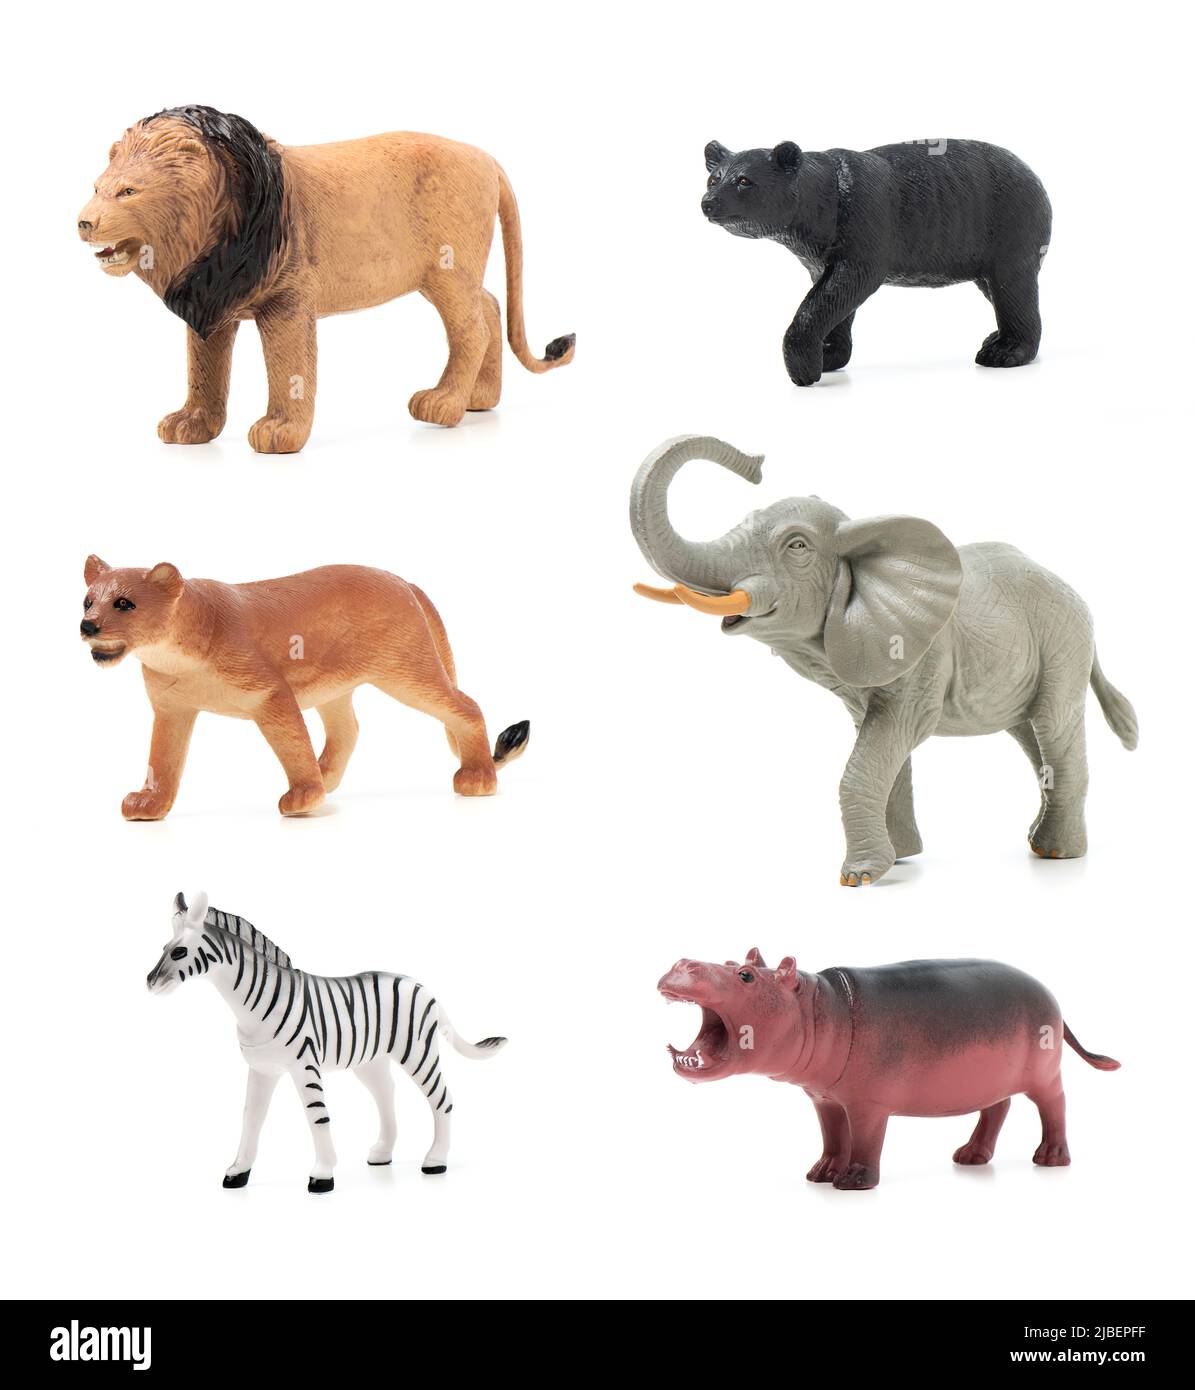 Grupo de animales de la selva juguetes aislados sobre fondo blanco.  Juguetes de animales de plástico Fotografía de stock - Alamy